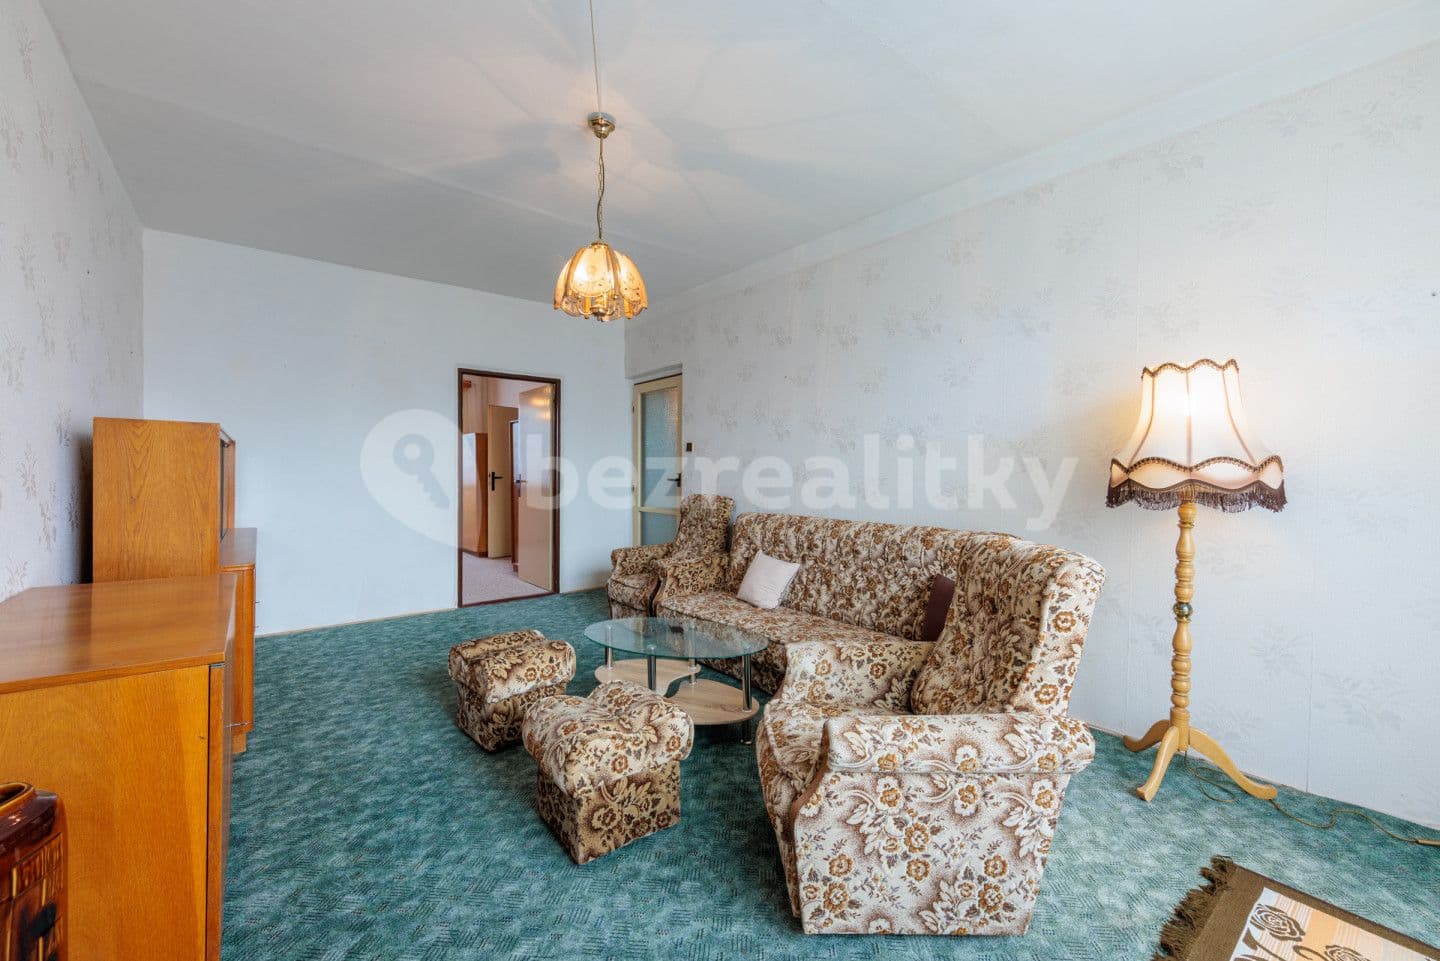 2 bedroom flat for sale, 50 m², 17. listopadu, Cheb, Karlovarský Region